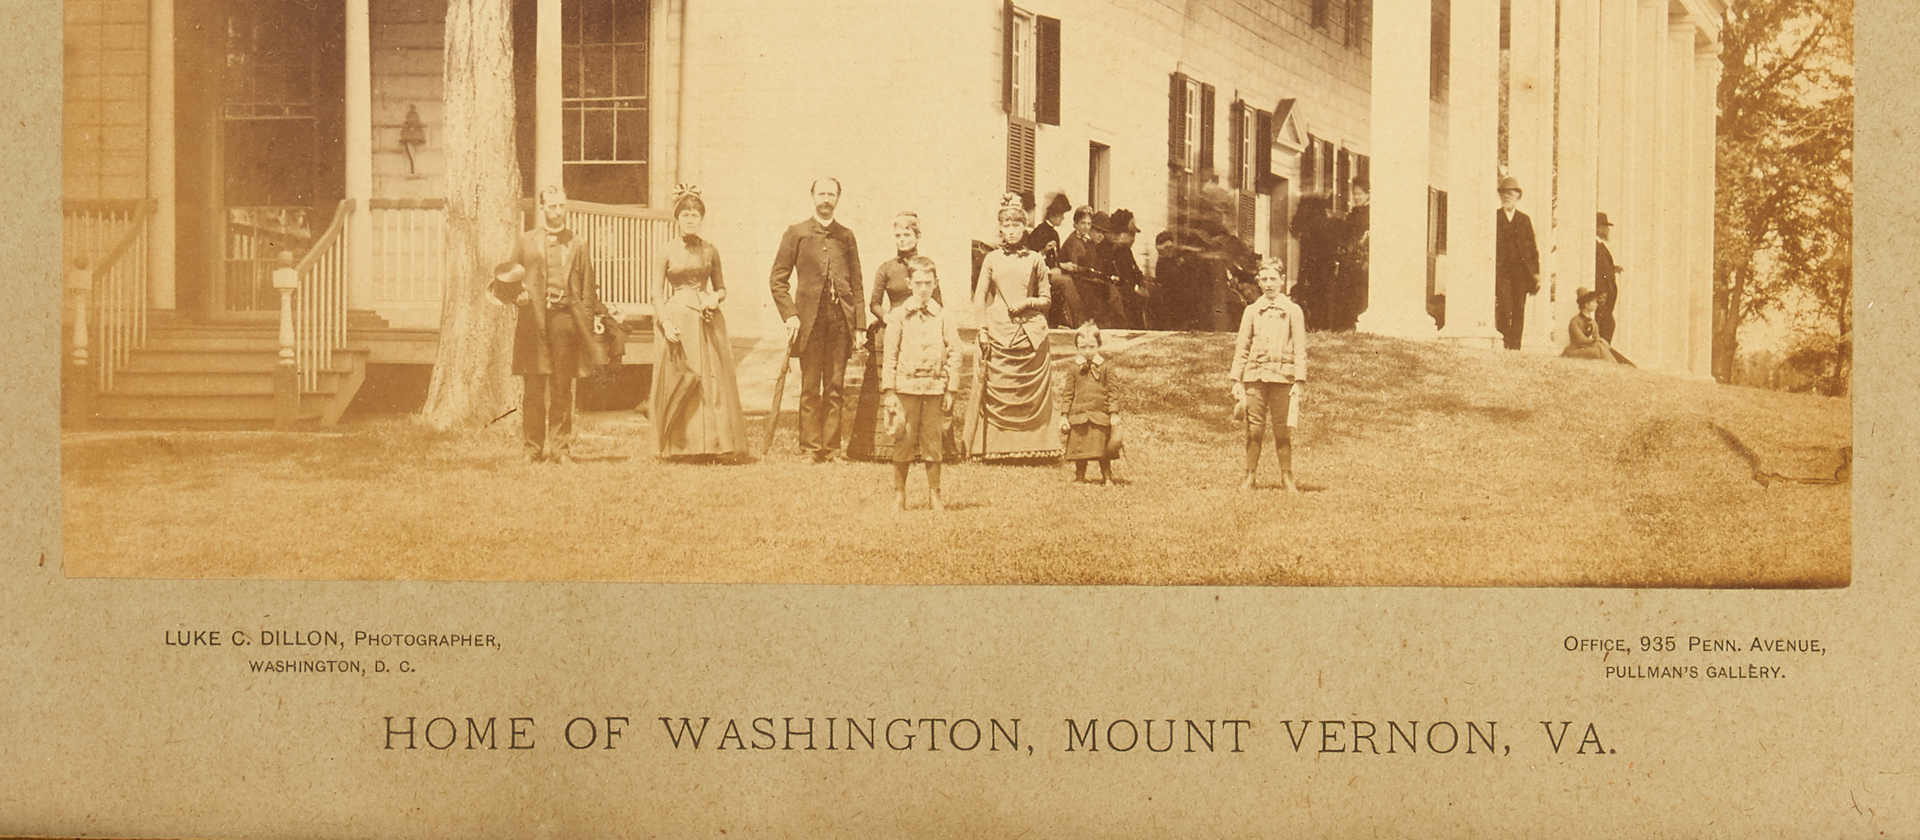 Lot 607: Rare Print of Lincoln Assassination plus Albumen Print of Mt. Vernon